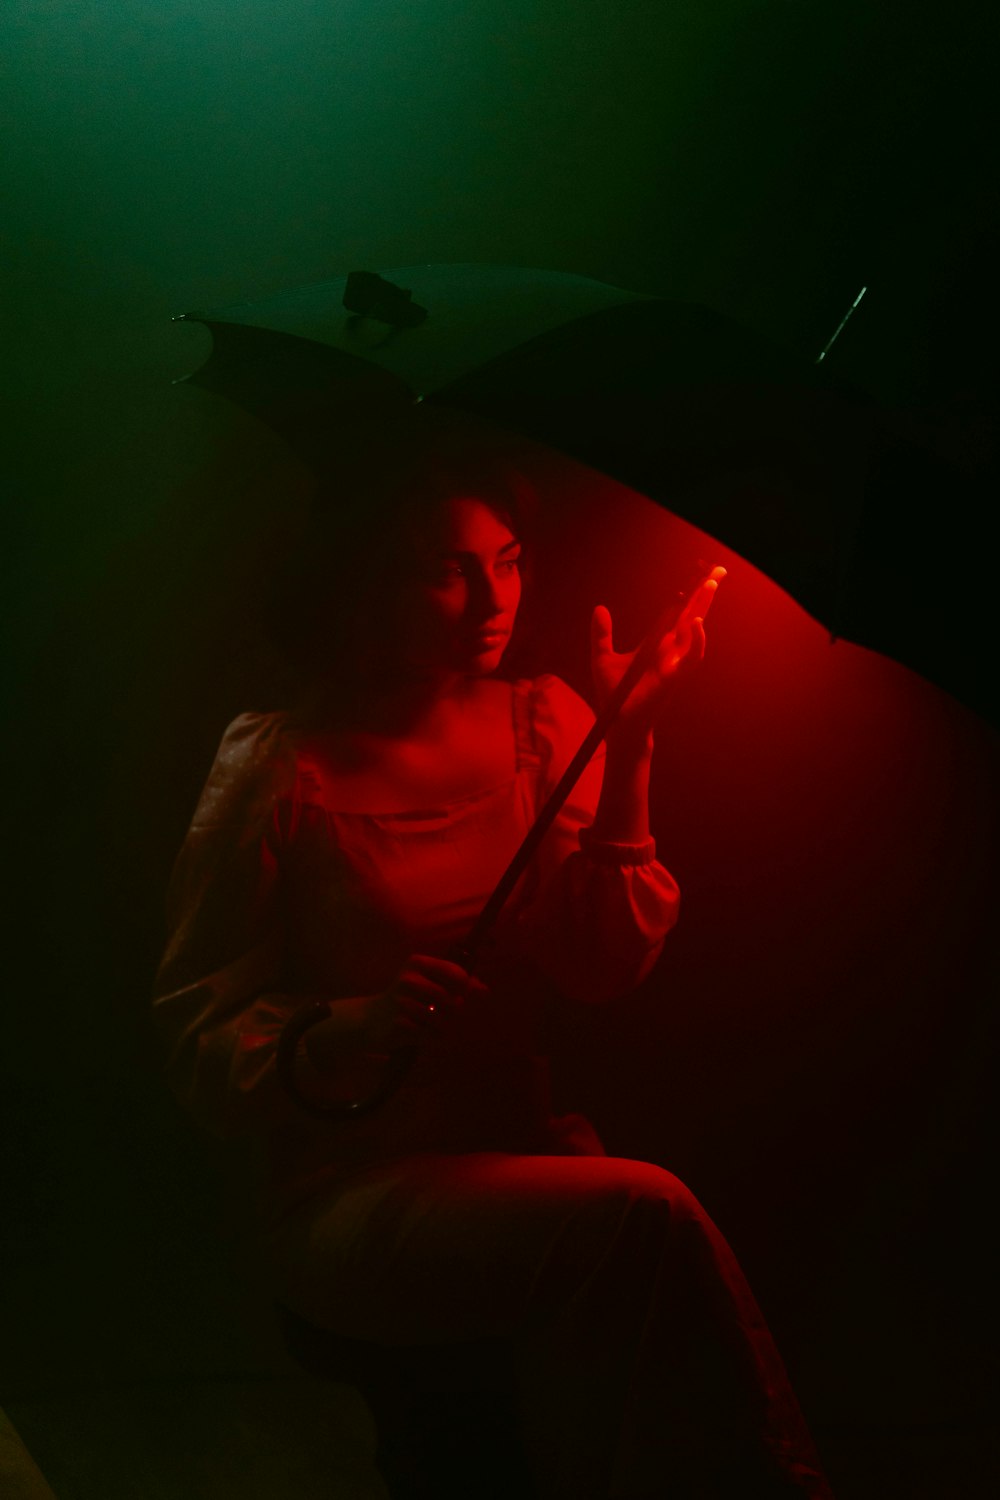 a woman holding an umbrella in a dark room